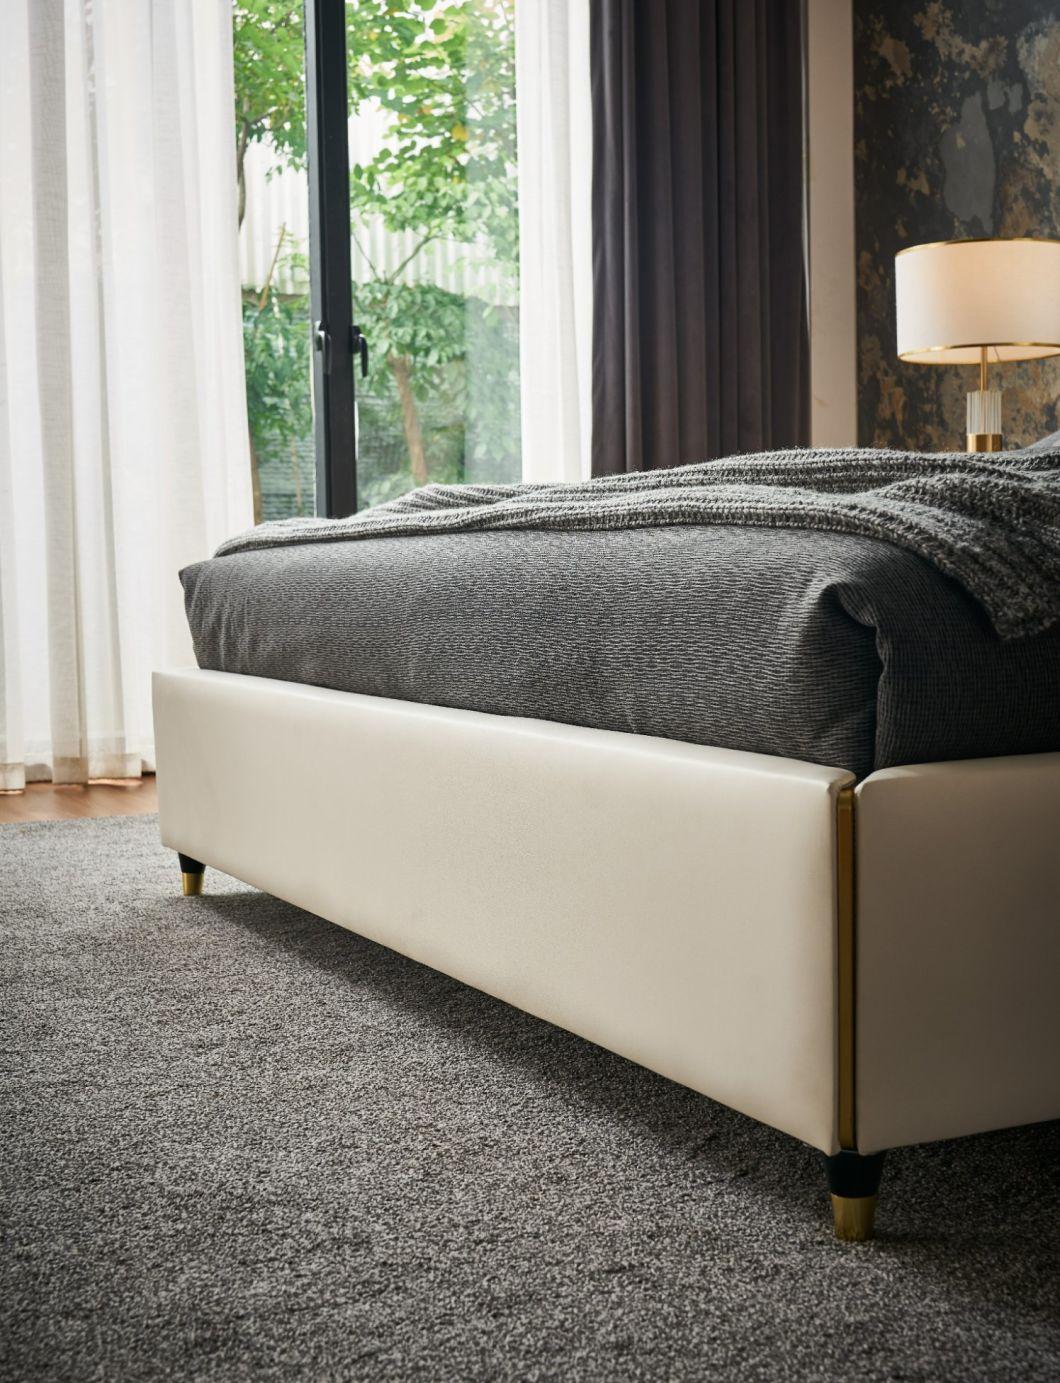 Manufacture Bedroom Furniture Home Furniture Set Modern Hotel Beds Leather Bed a-Wf015